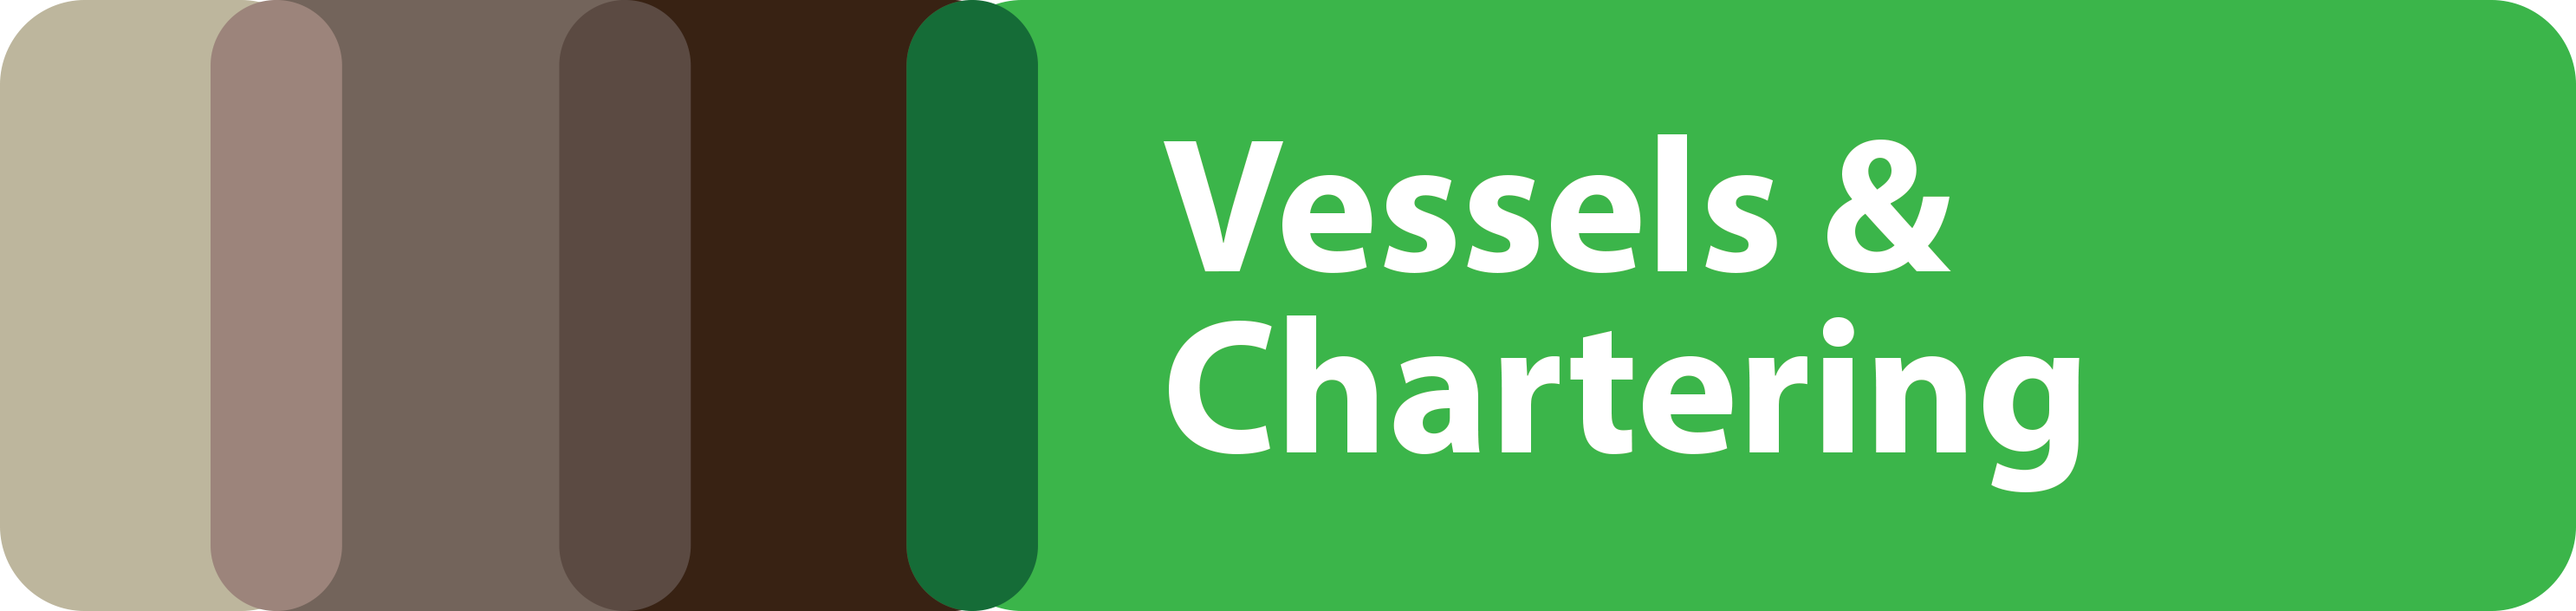 Vessels & Chartering